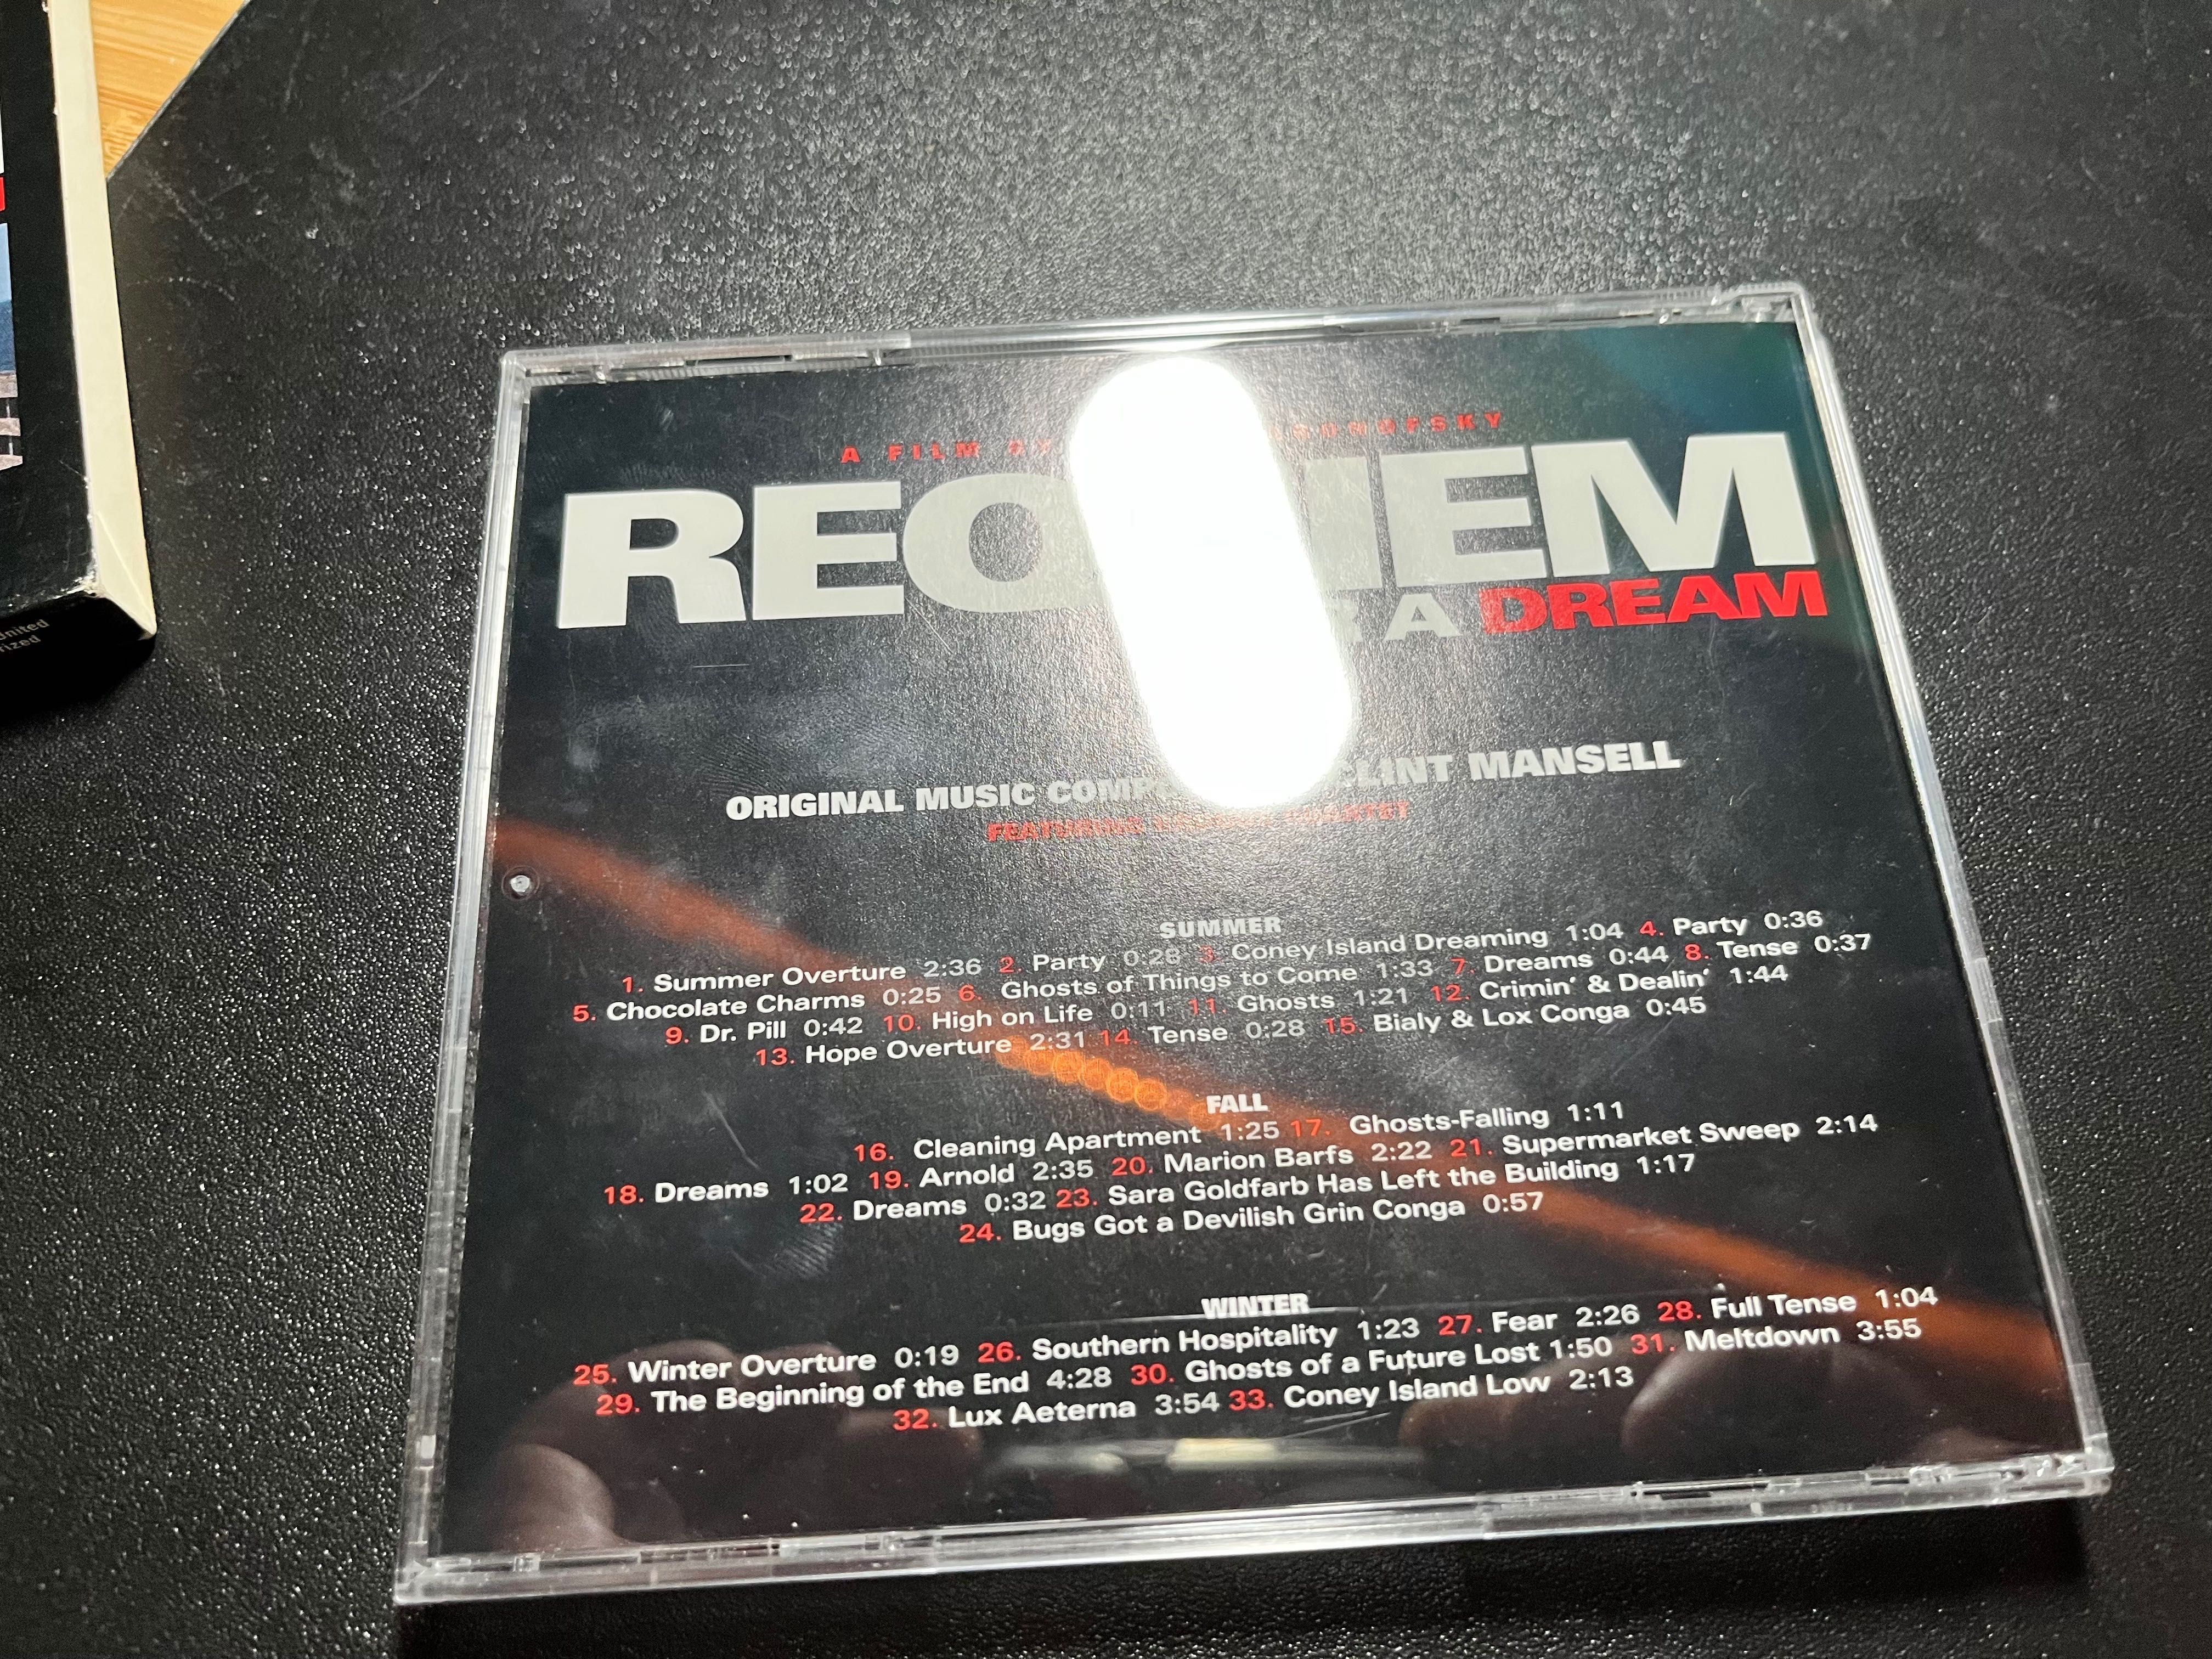 CD Clint Mansell "Requiem for a dream"